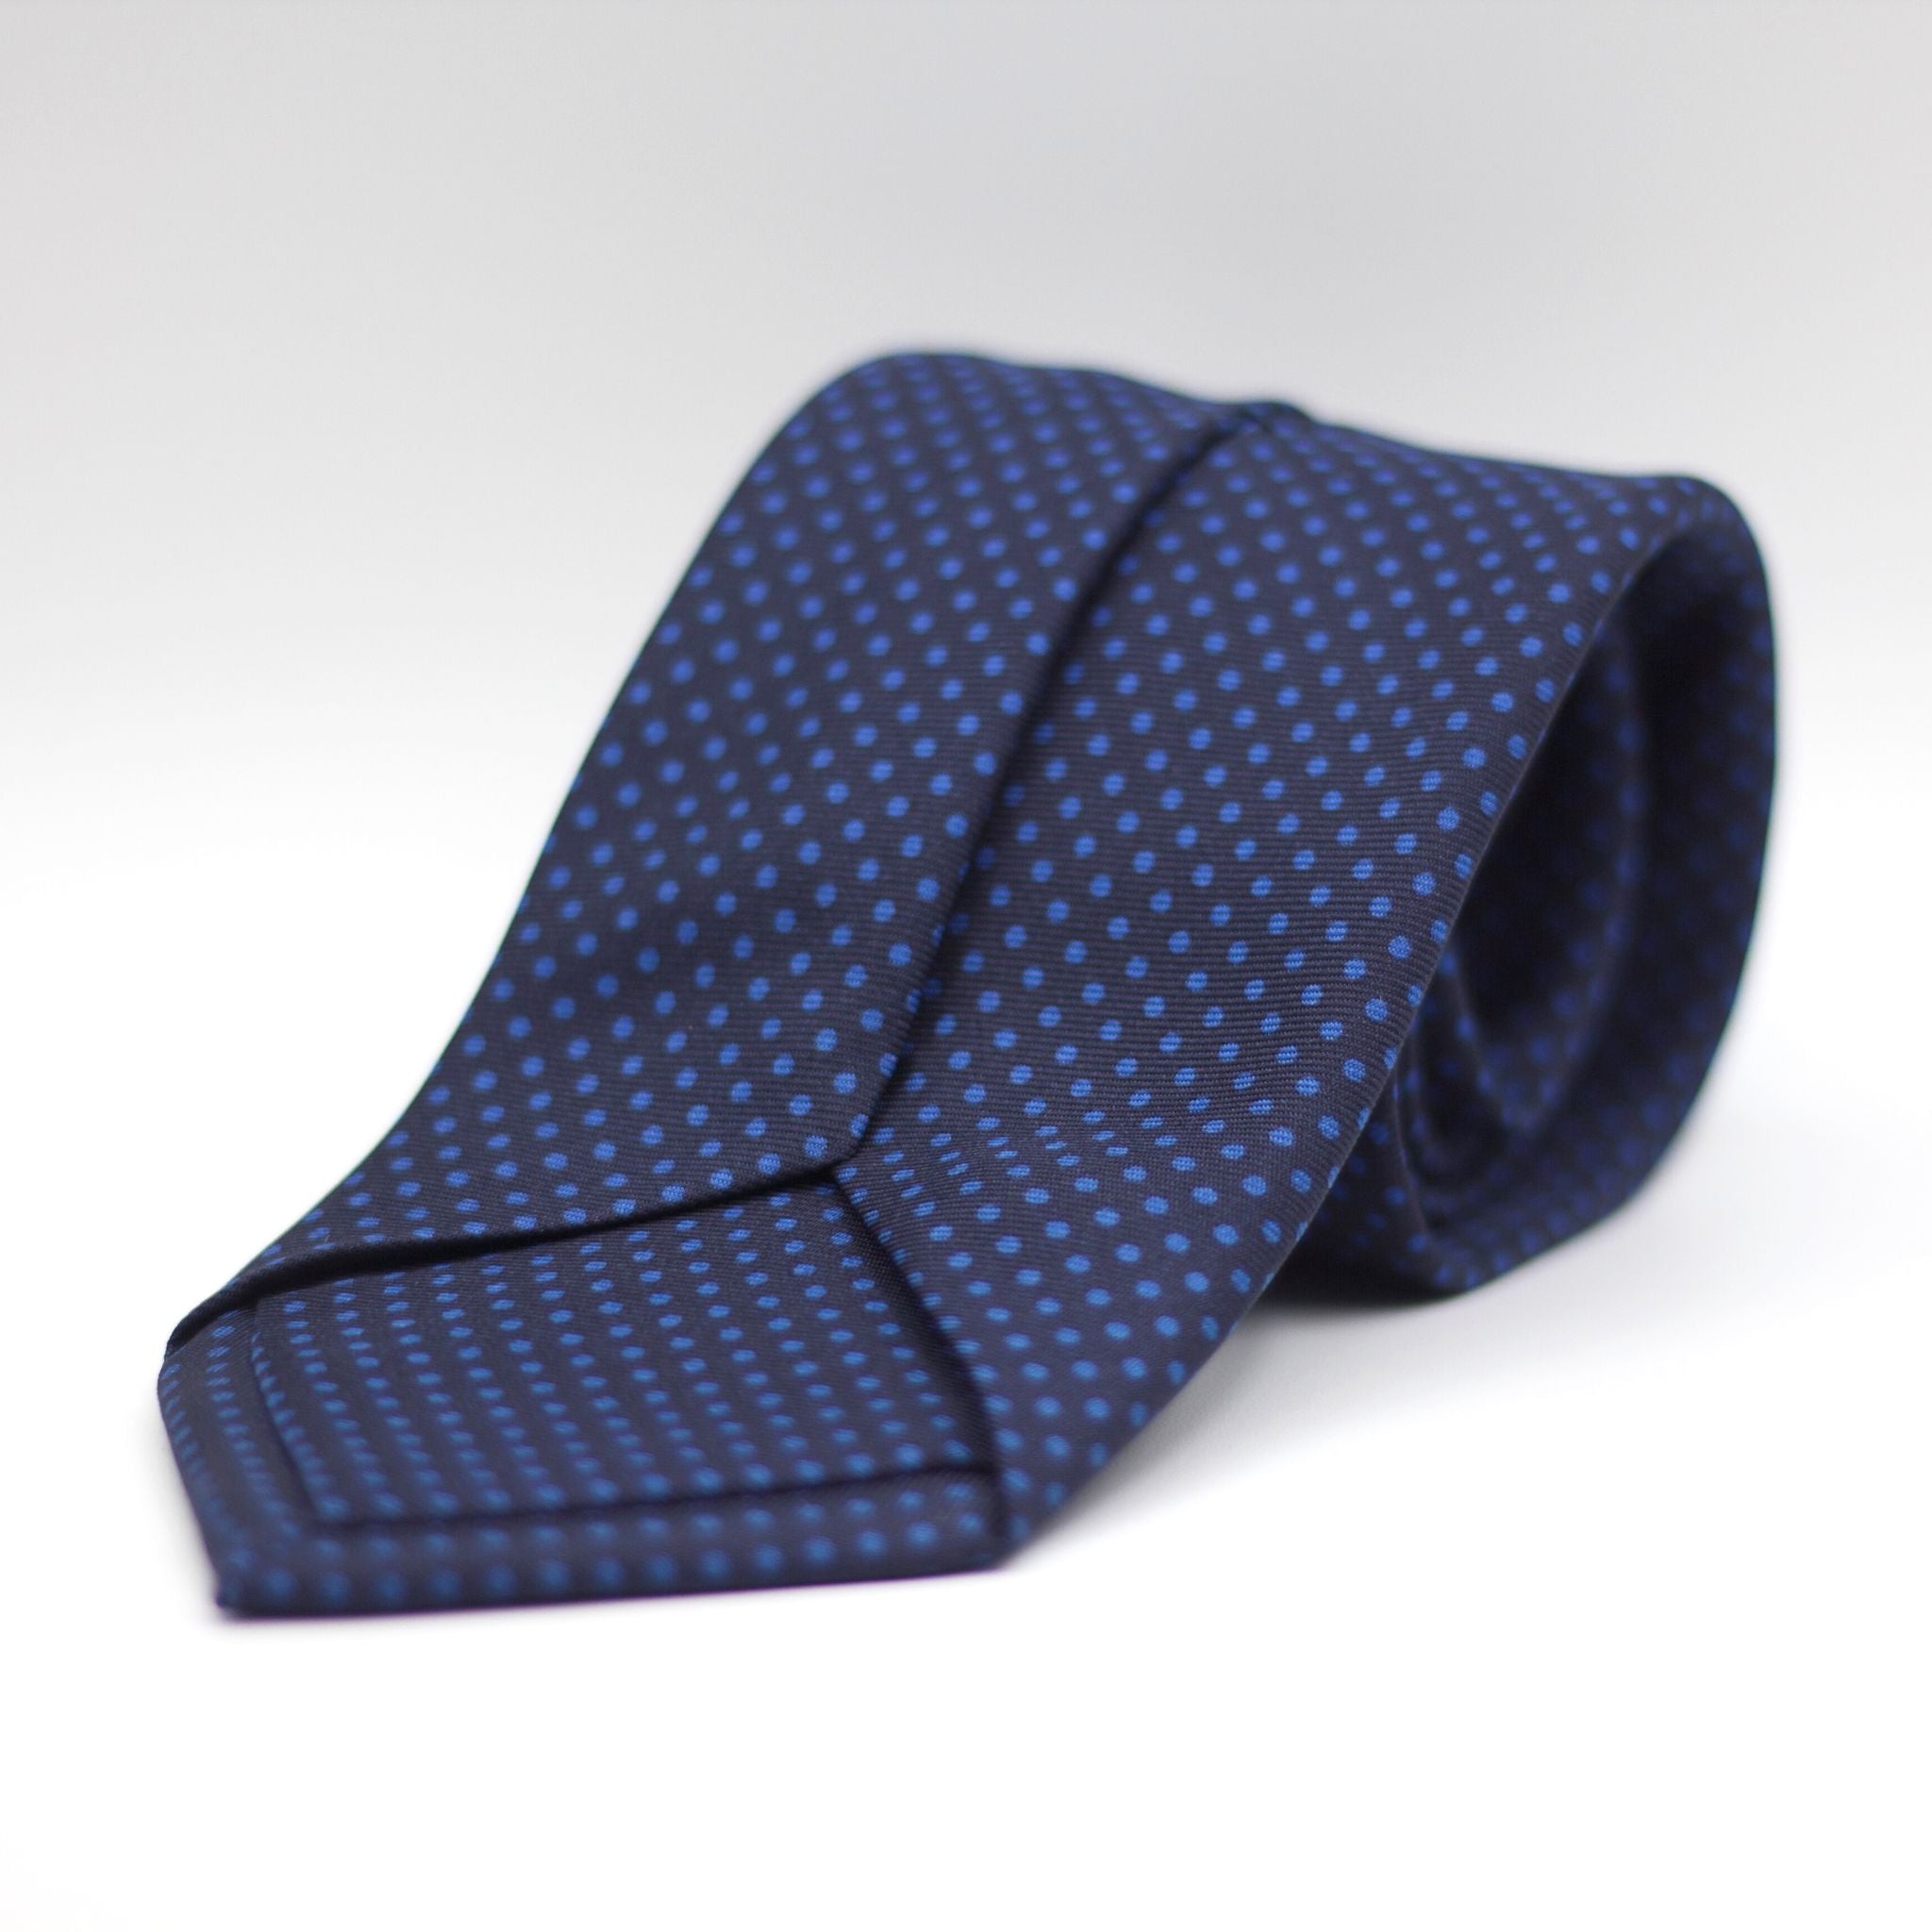 Holliday & Brown - Woven Jacquard Silk - Blue, Light Blue Pin Dots Tie 